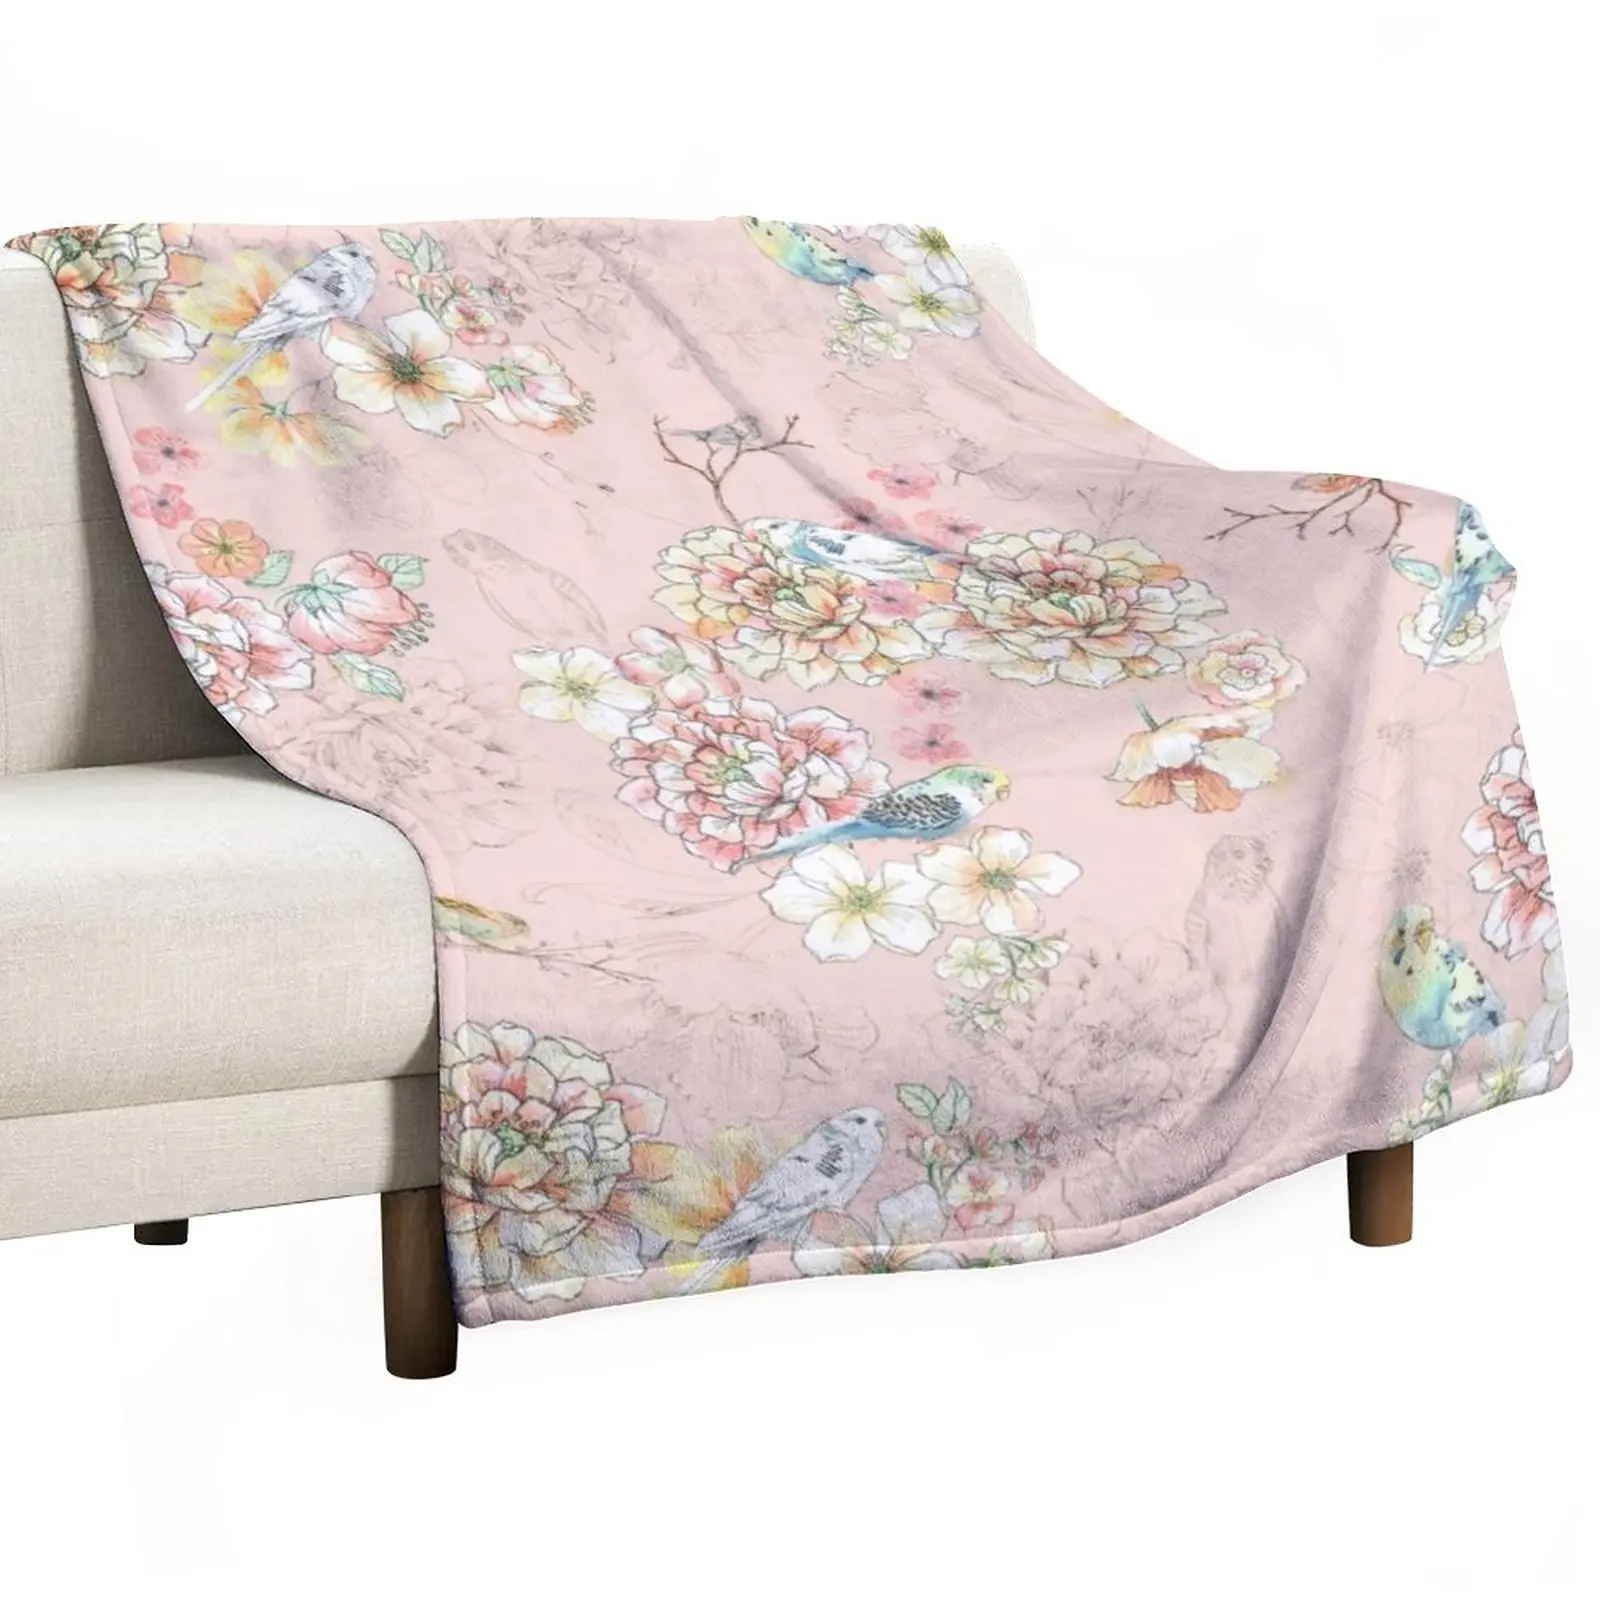 

Budgie print Throw Blanket decorative Comforter valentine gift ideas fluffy Blankets